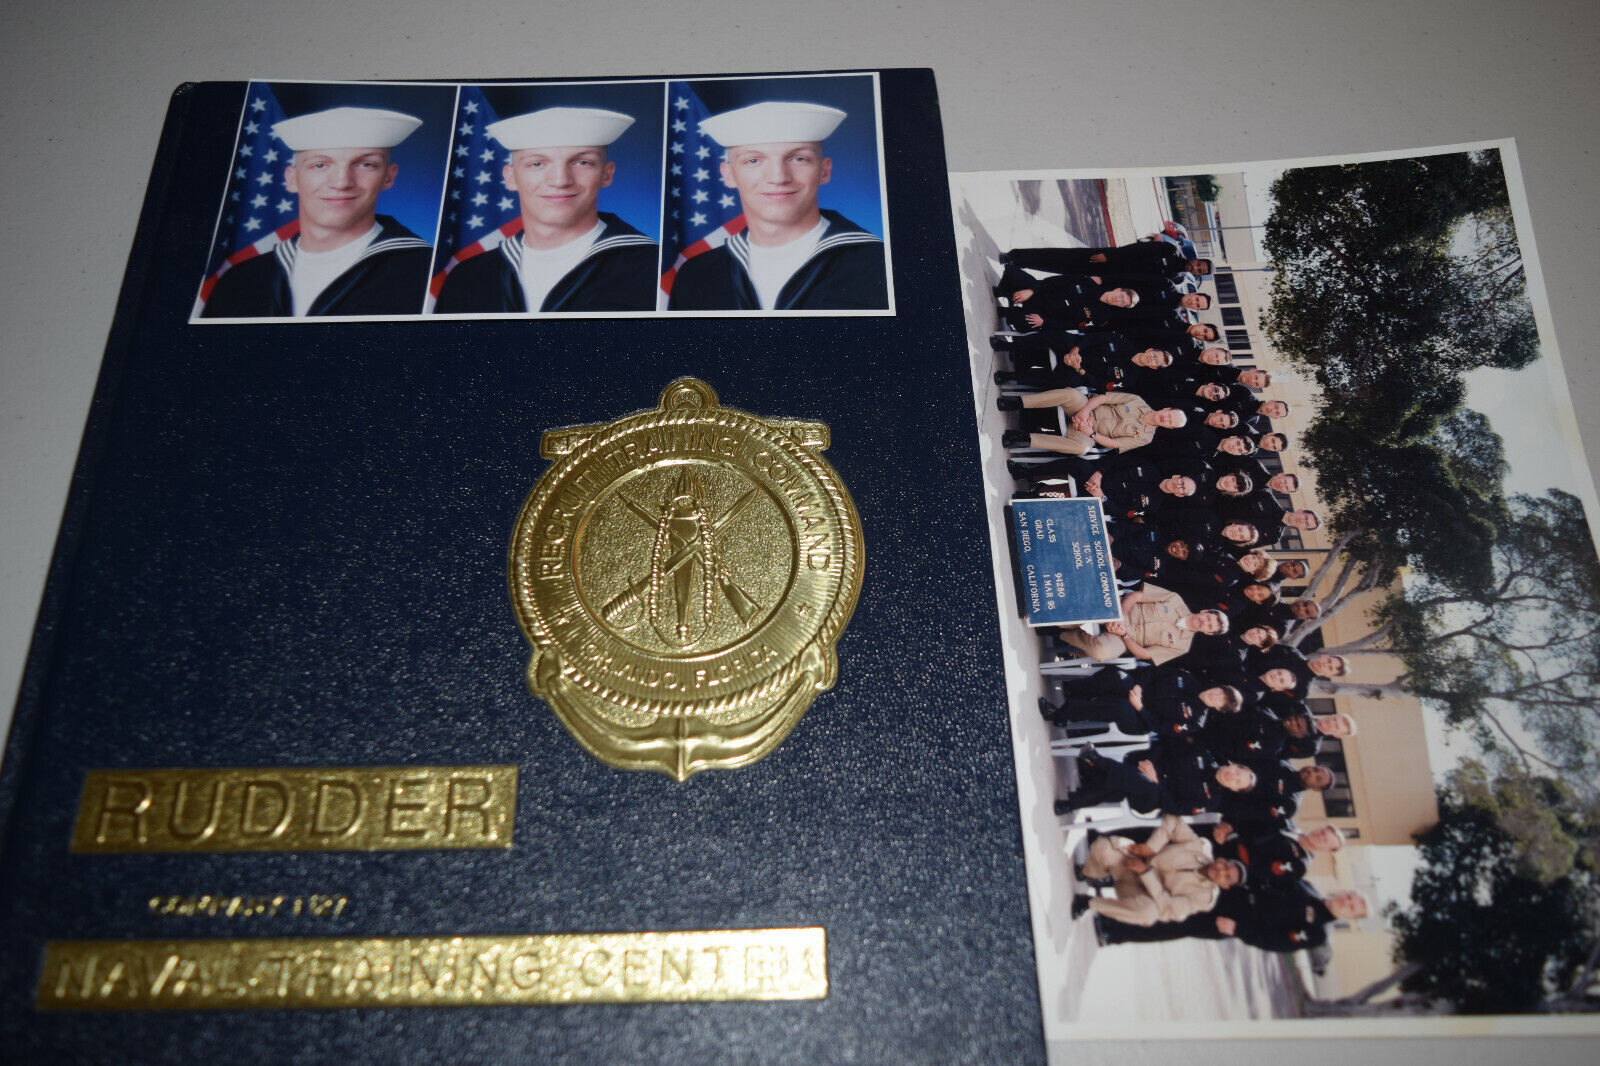 Rudder Naval Training Center Company I127 1994 Recruit Training Command Florida